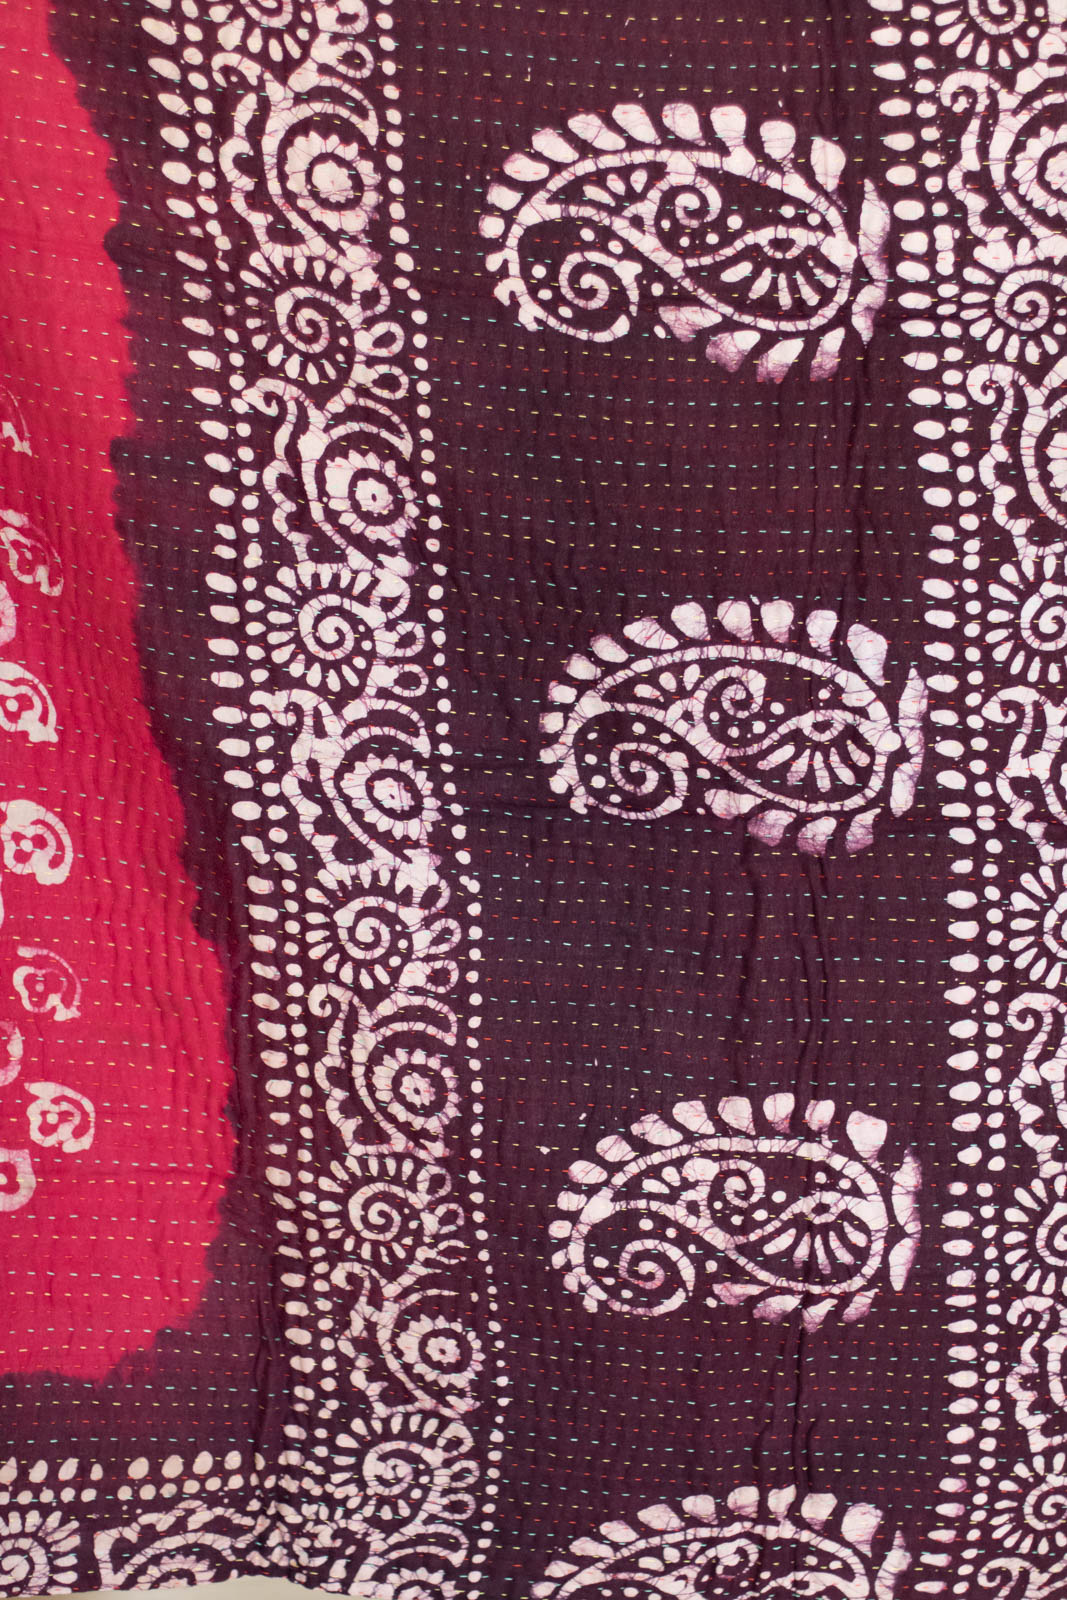 Special No. 1 Kantha Mini Blanket